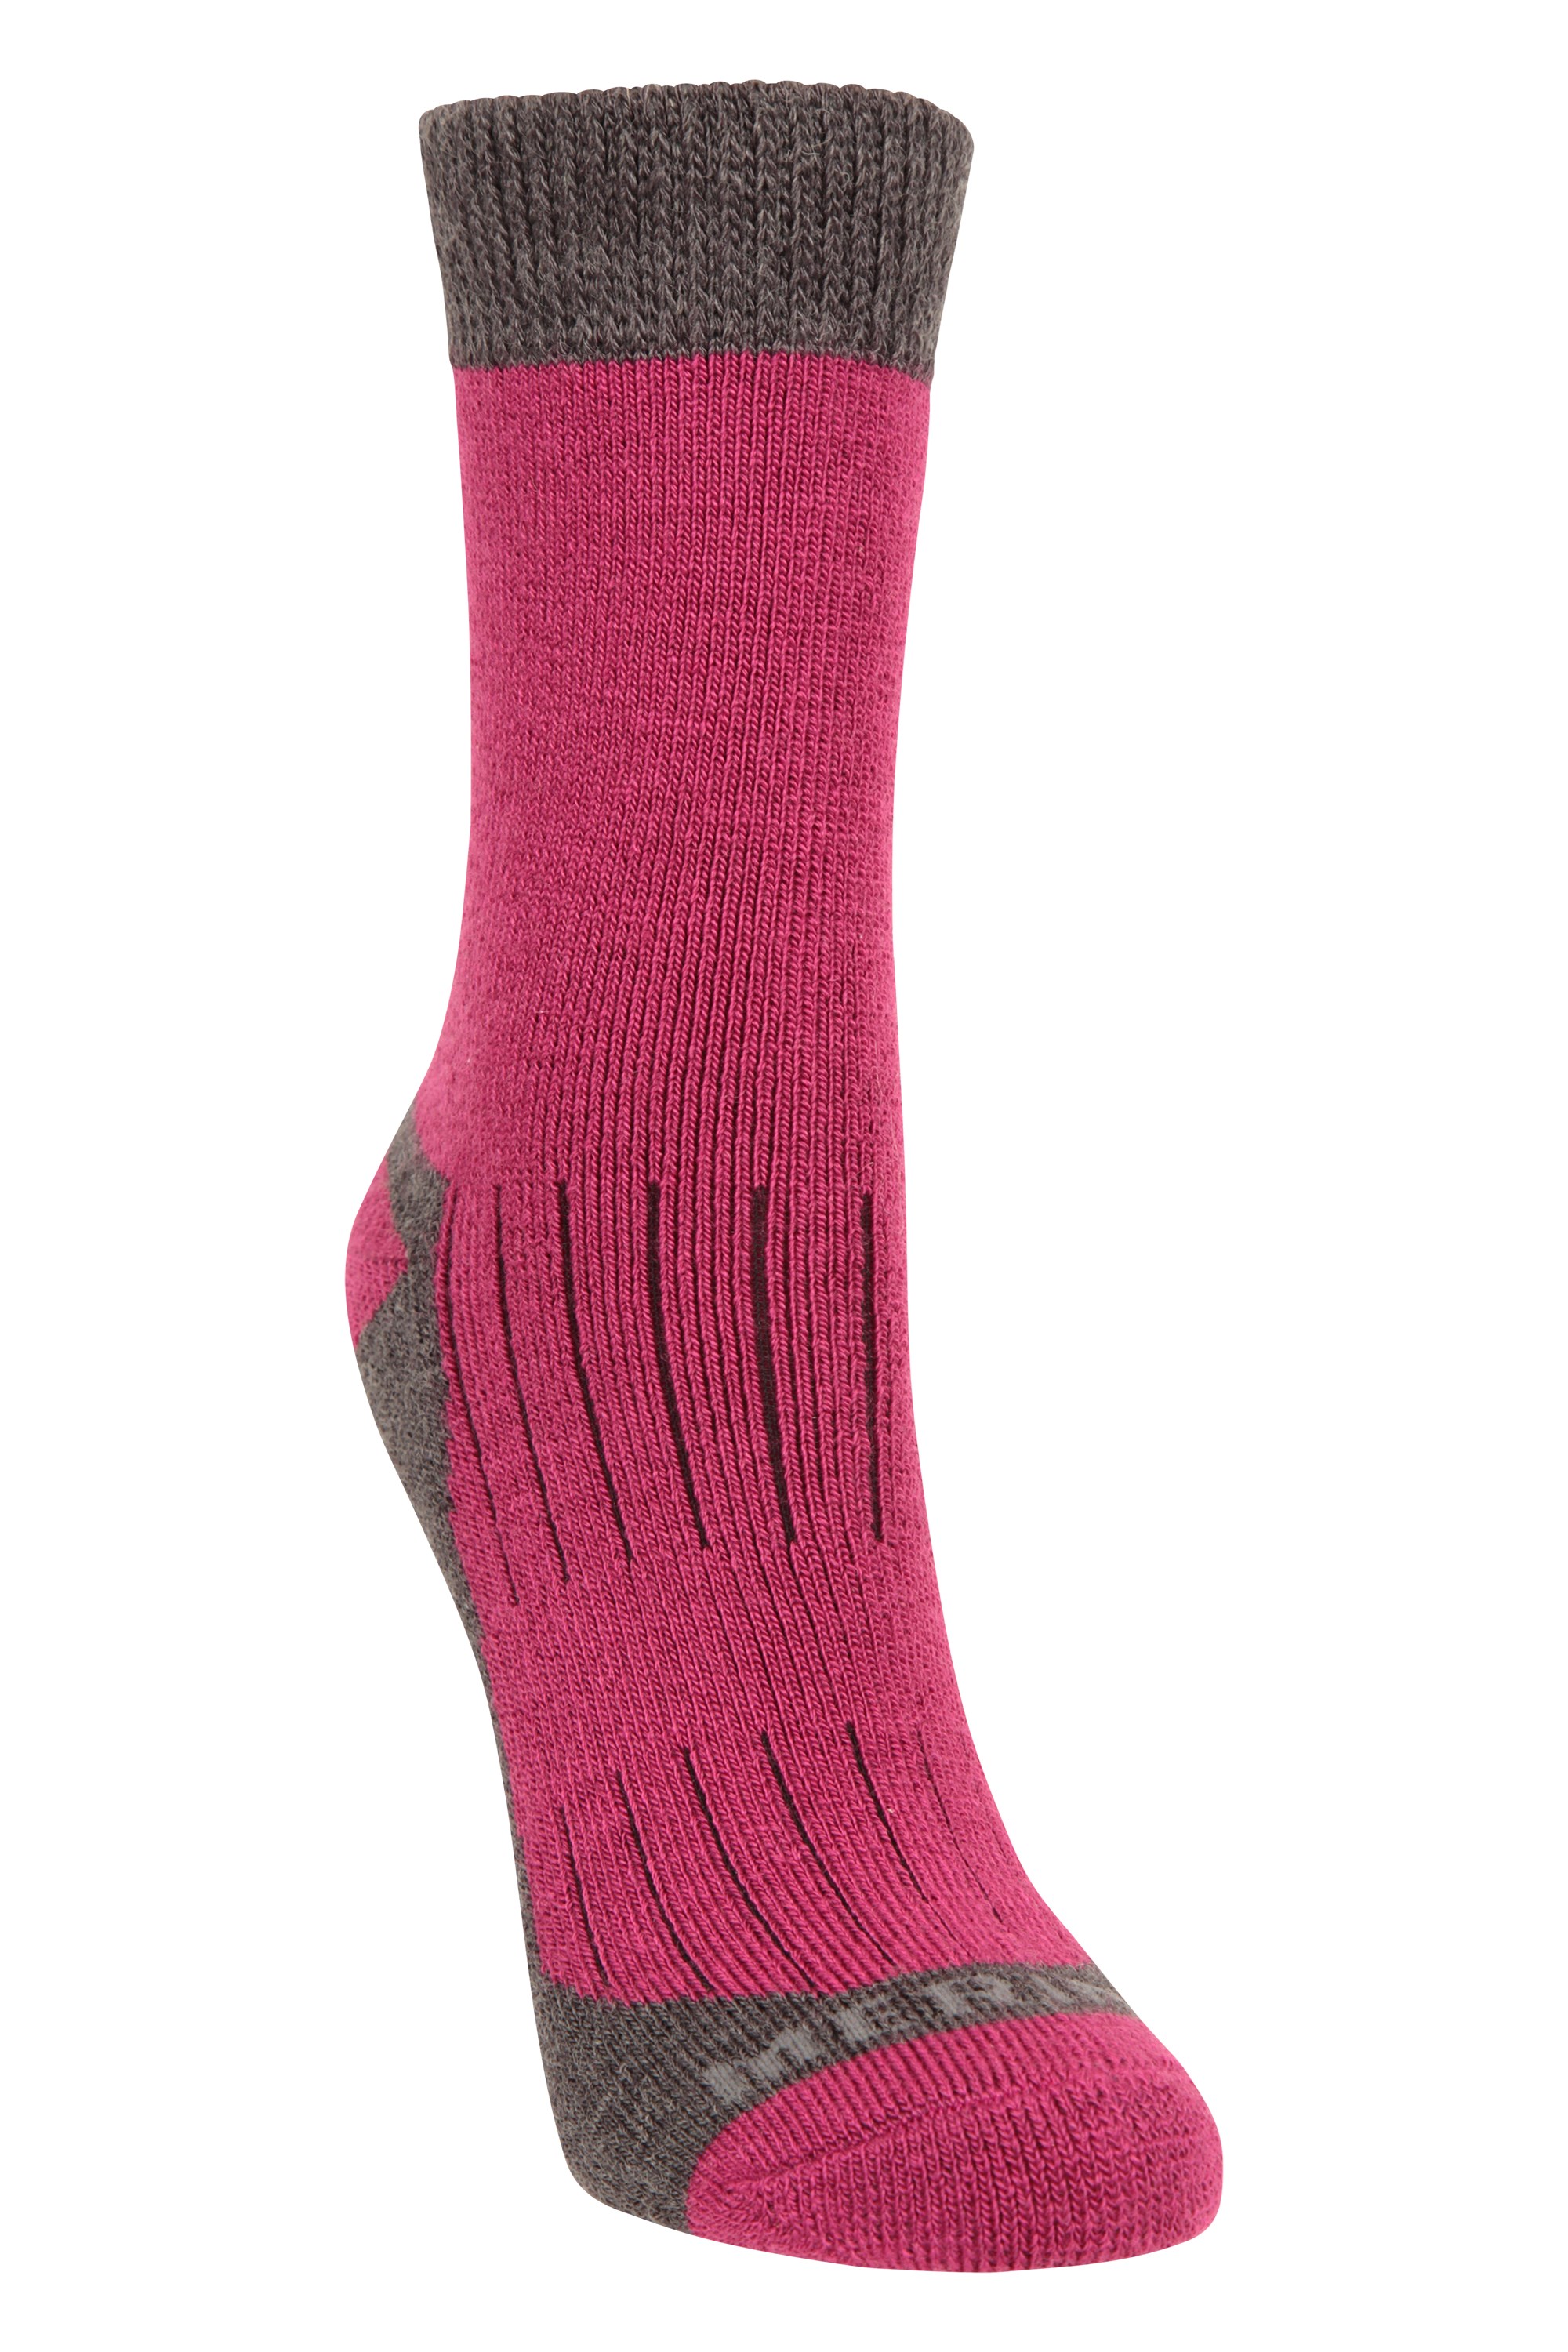 Why Choose Merino Wool Socks? — Baselayer Ltd